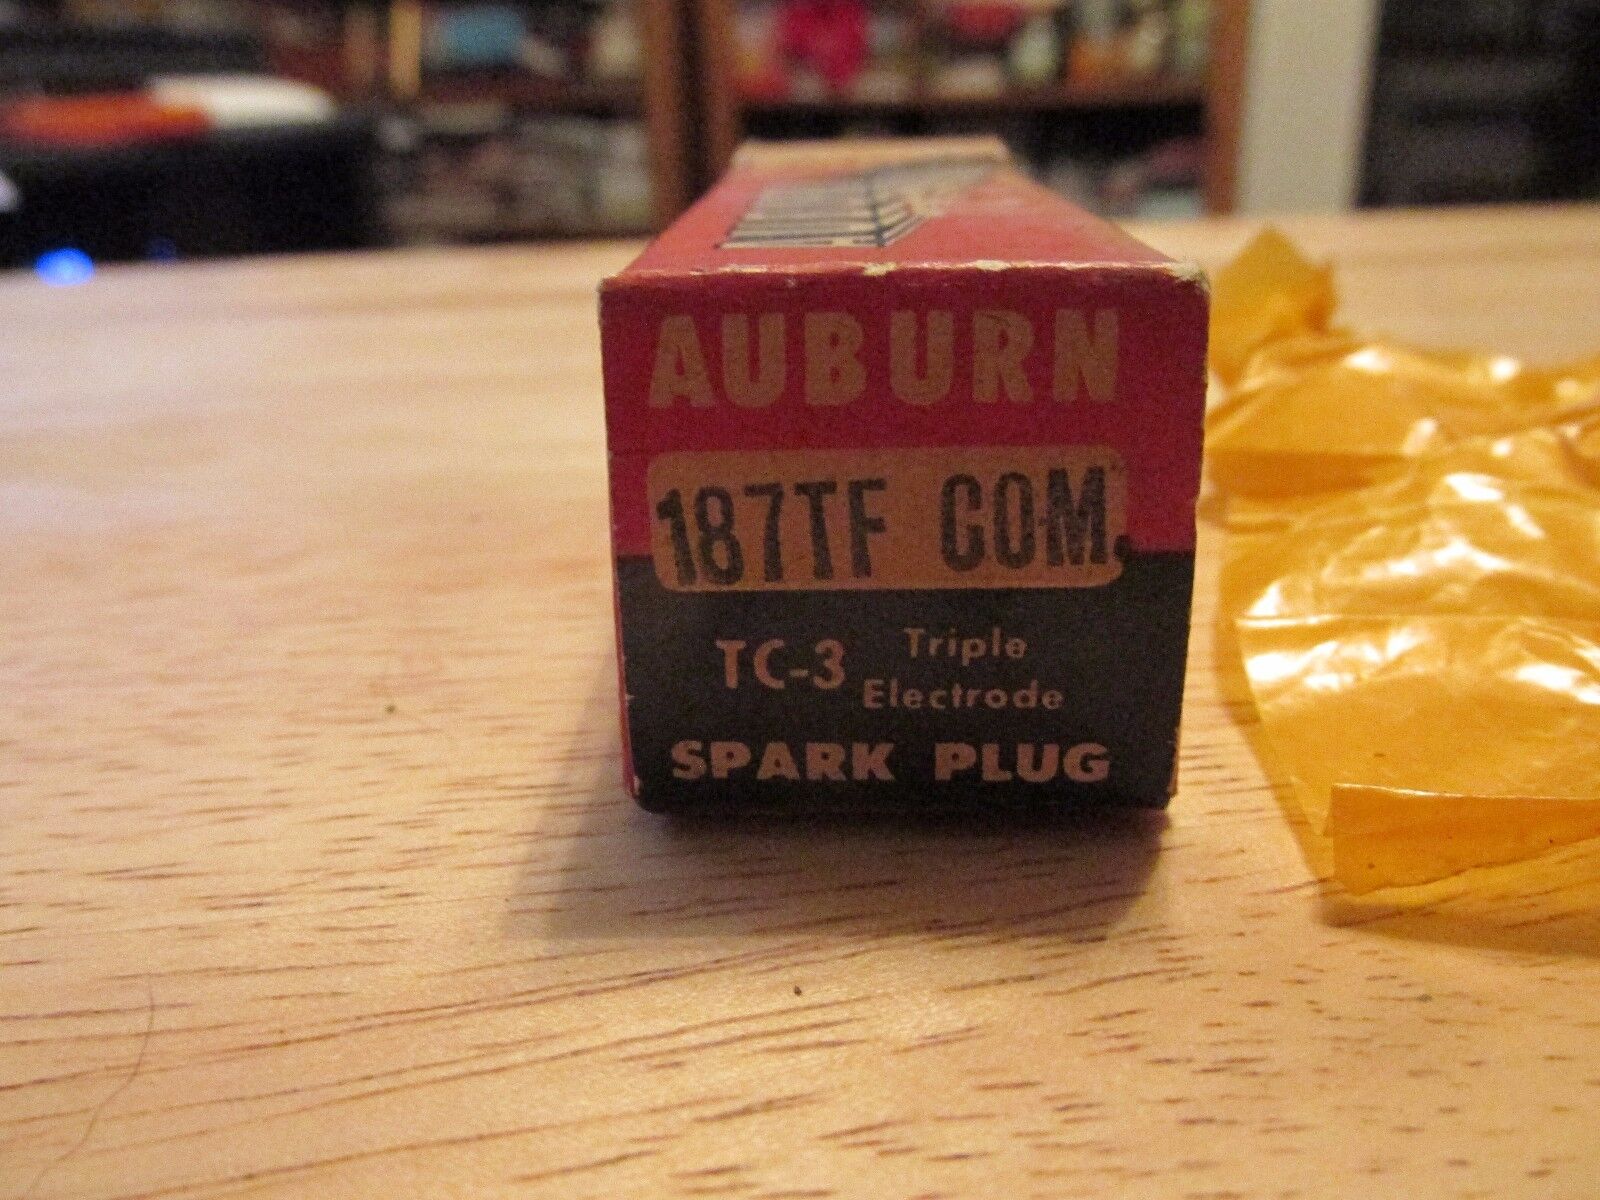 NOS Auburn TC-3 187 TF COM Spark Plug in box